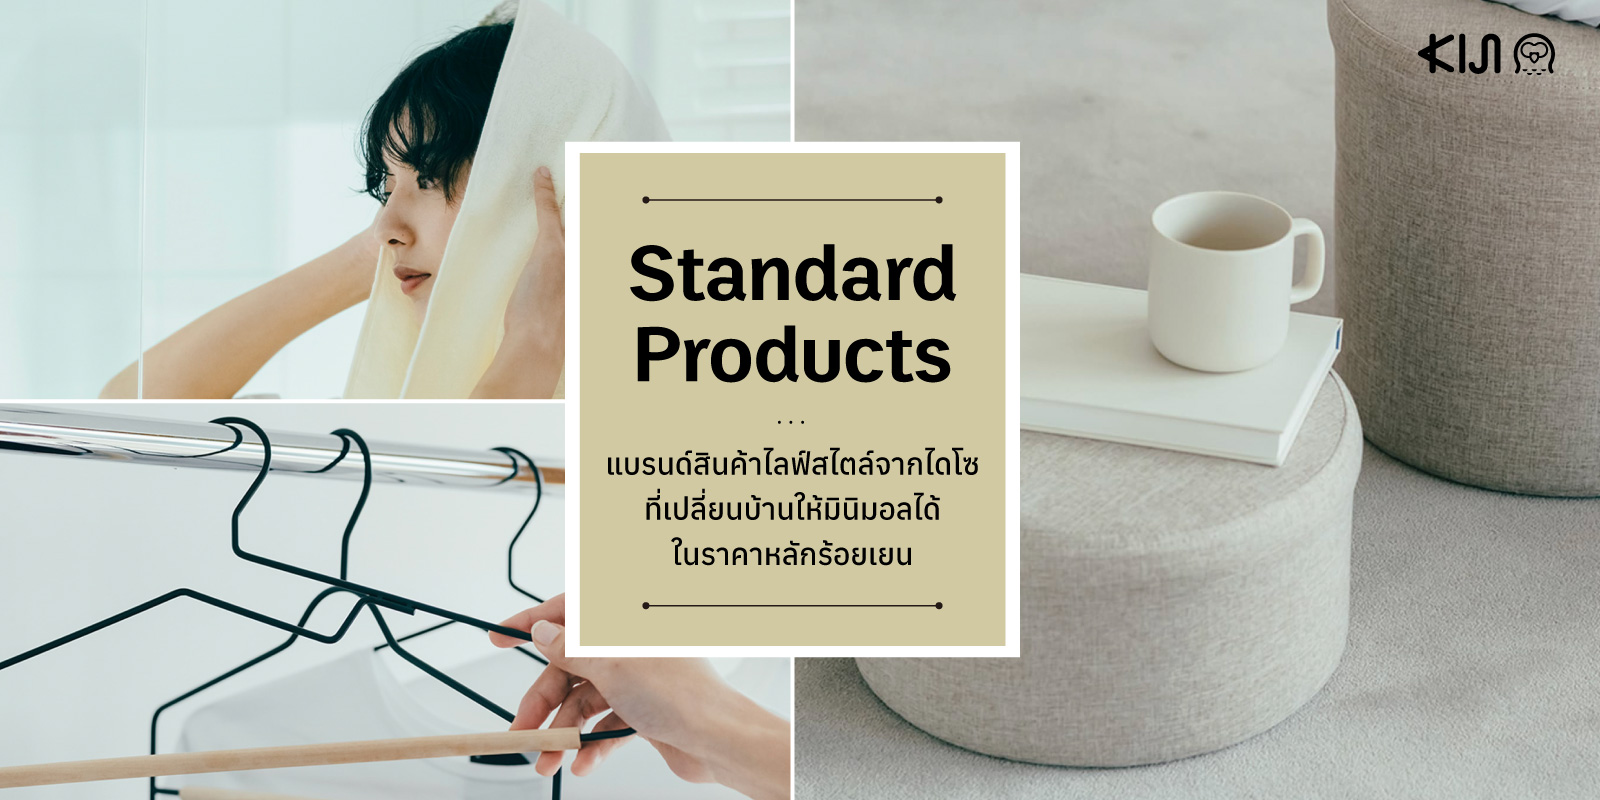 Standard Products แบรนด์ของตกแต่งบ้านจาก Daiso ญี่ปุ่น